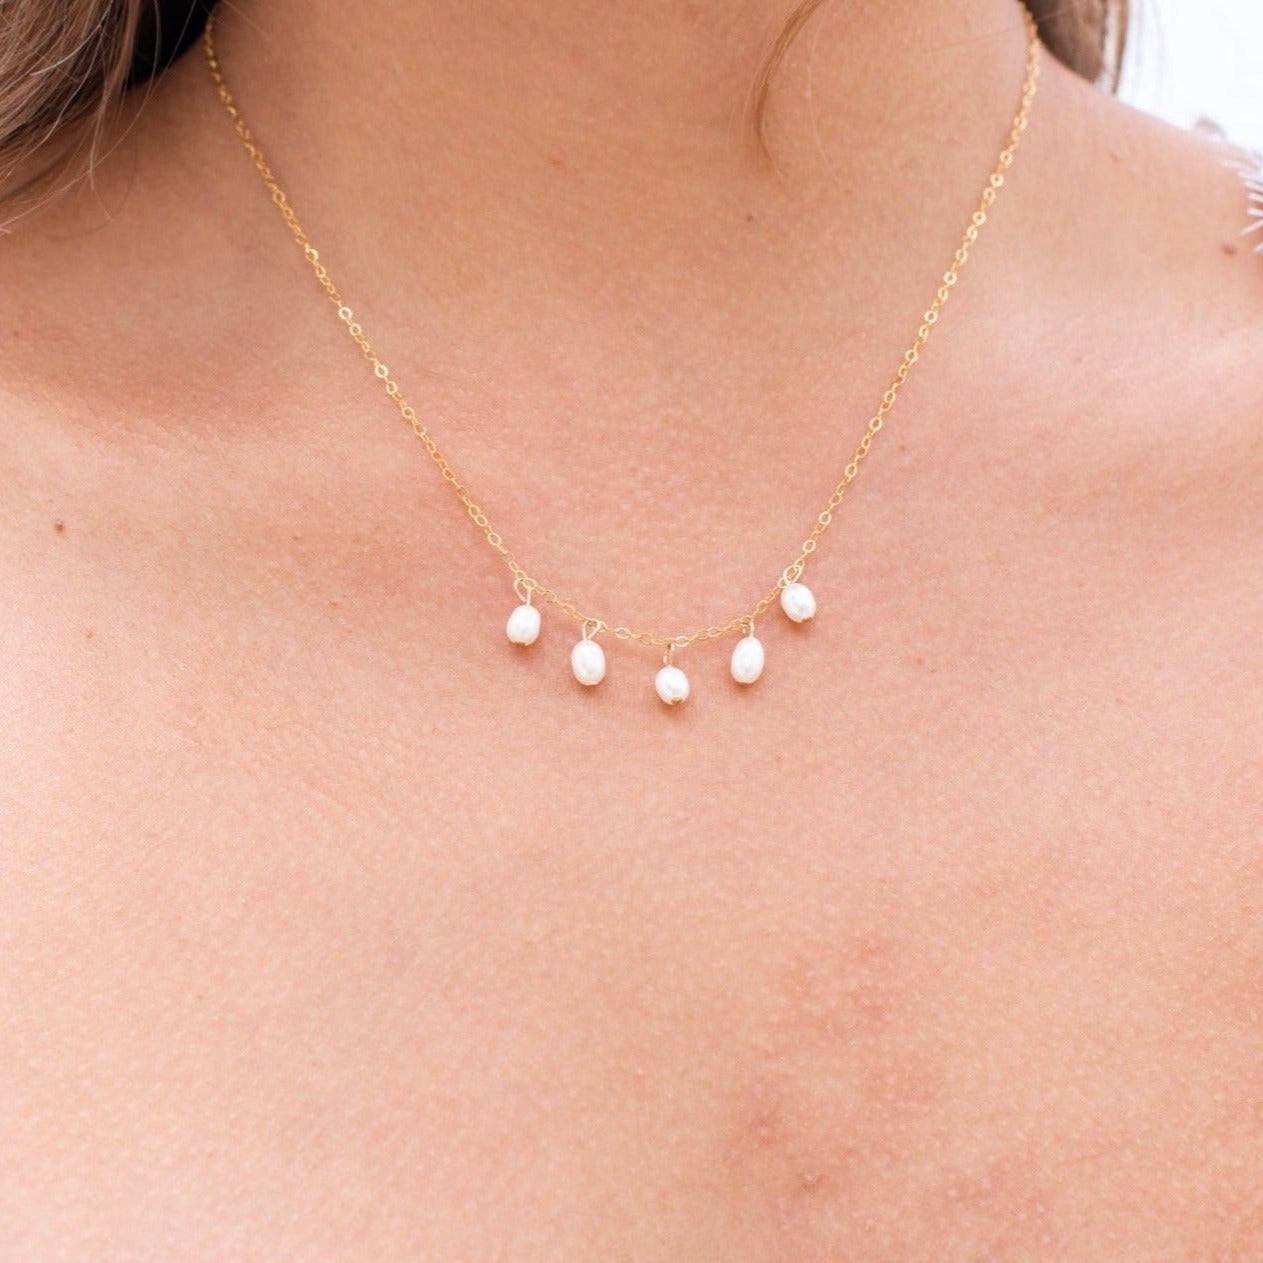 Droplet Necklace (Gold-filled, Sterling Silver)